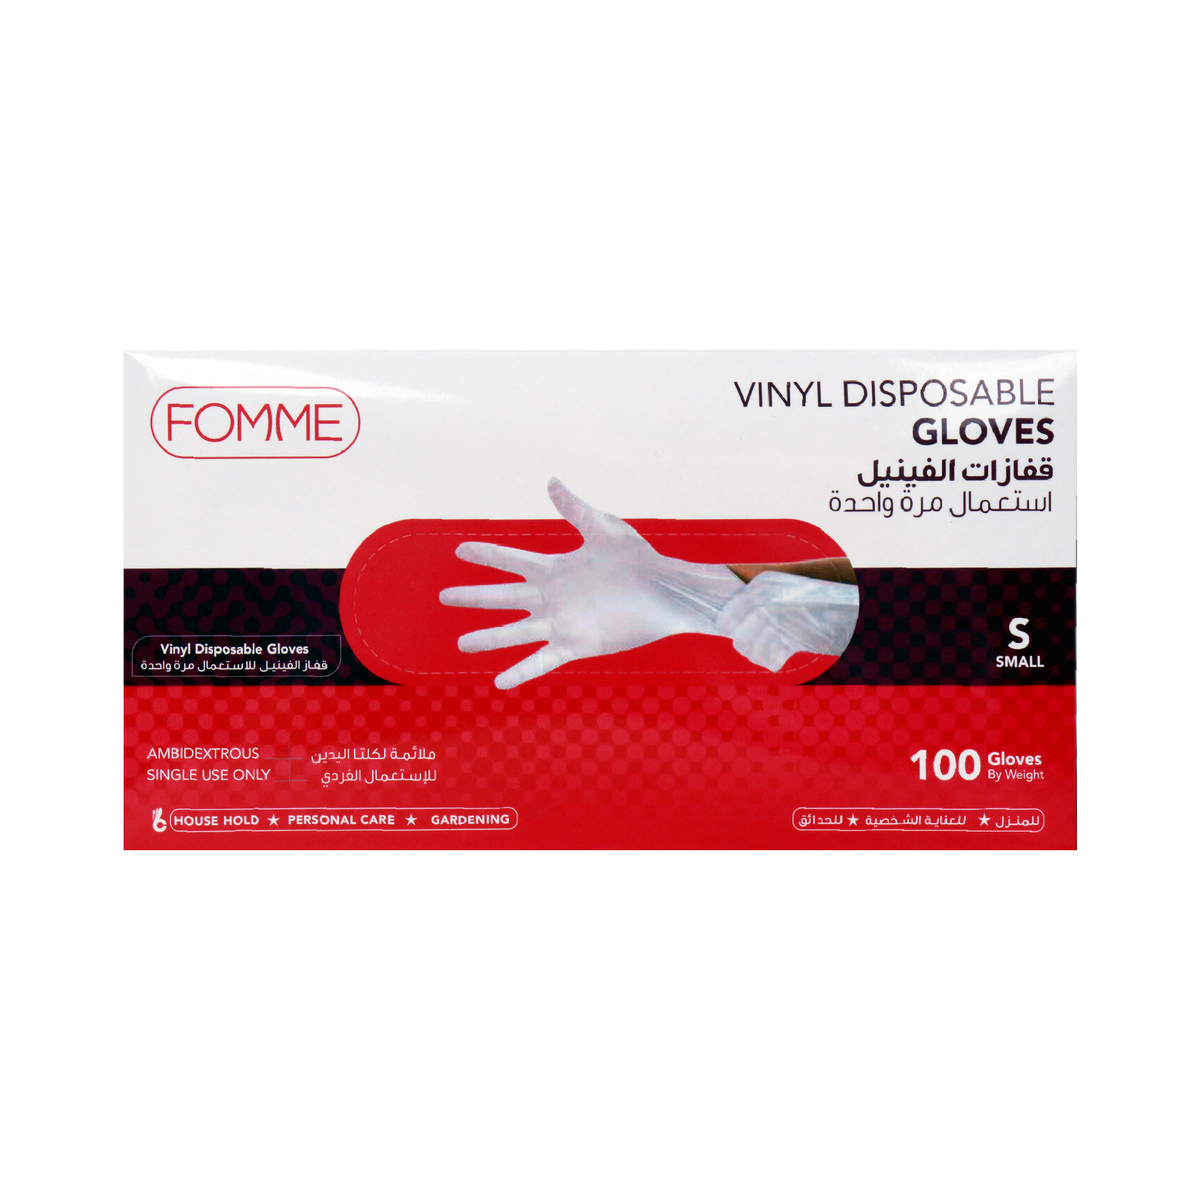 Fomme Vinyl Disposable Gloves Small 100pcs